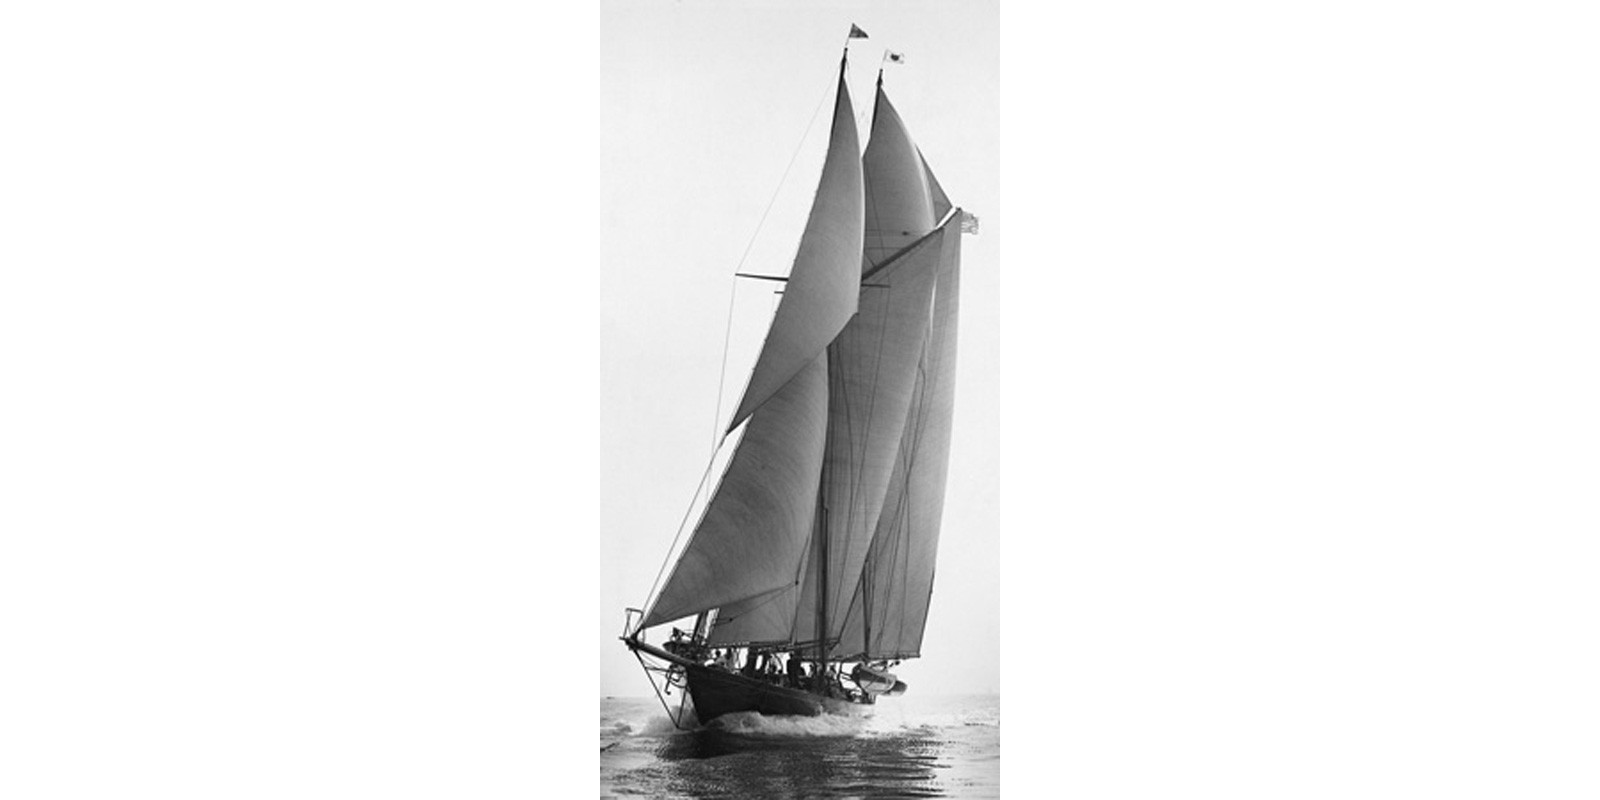 Edwin Levick - Cleopatra's Barge, 1922 (detail)